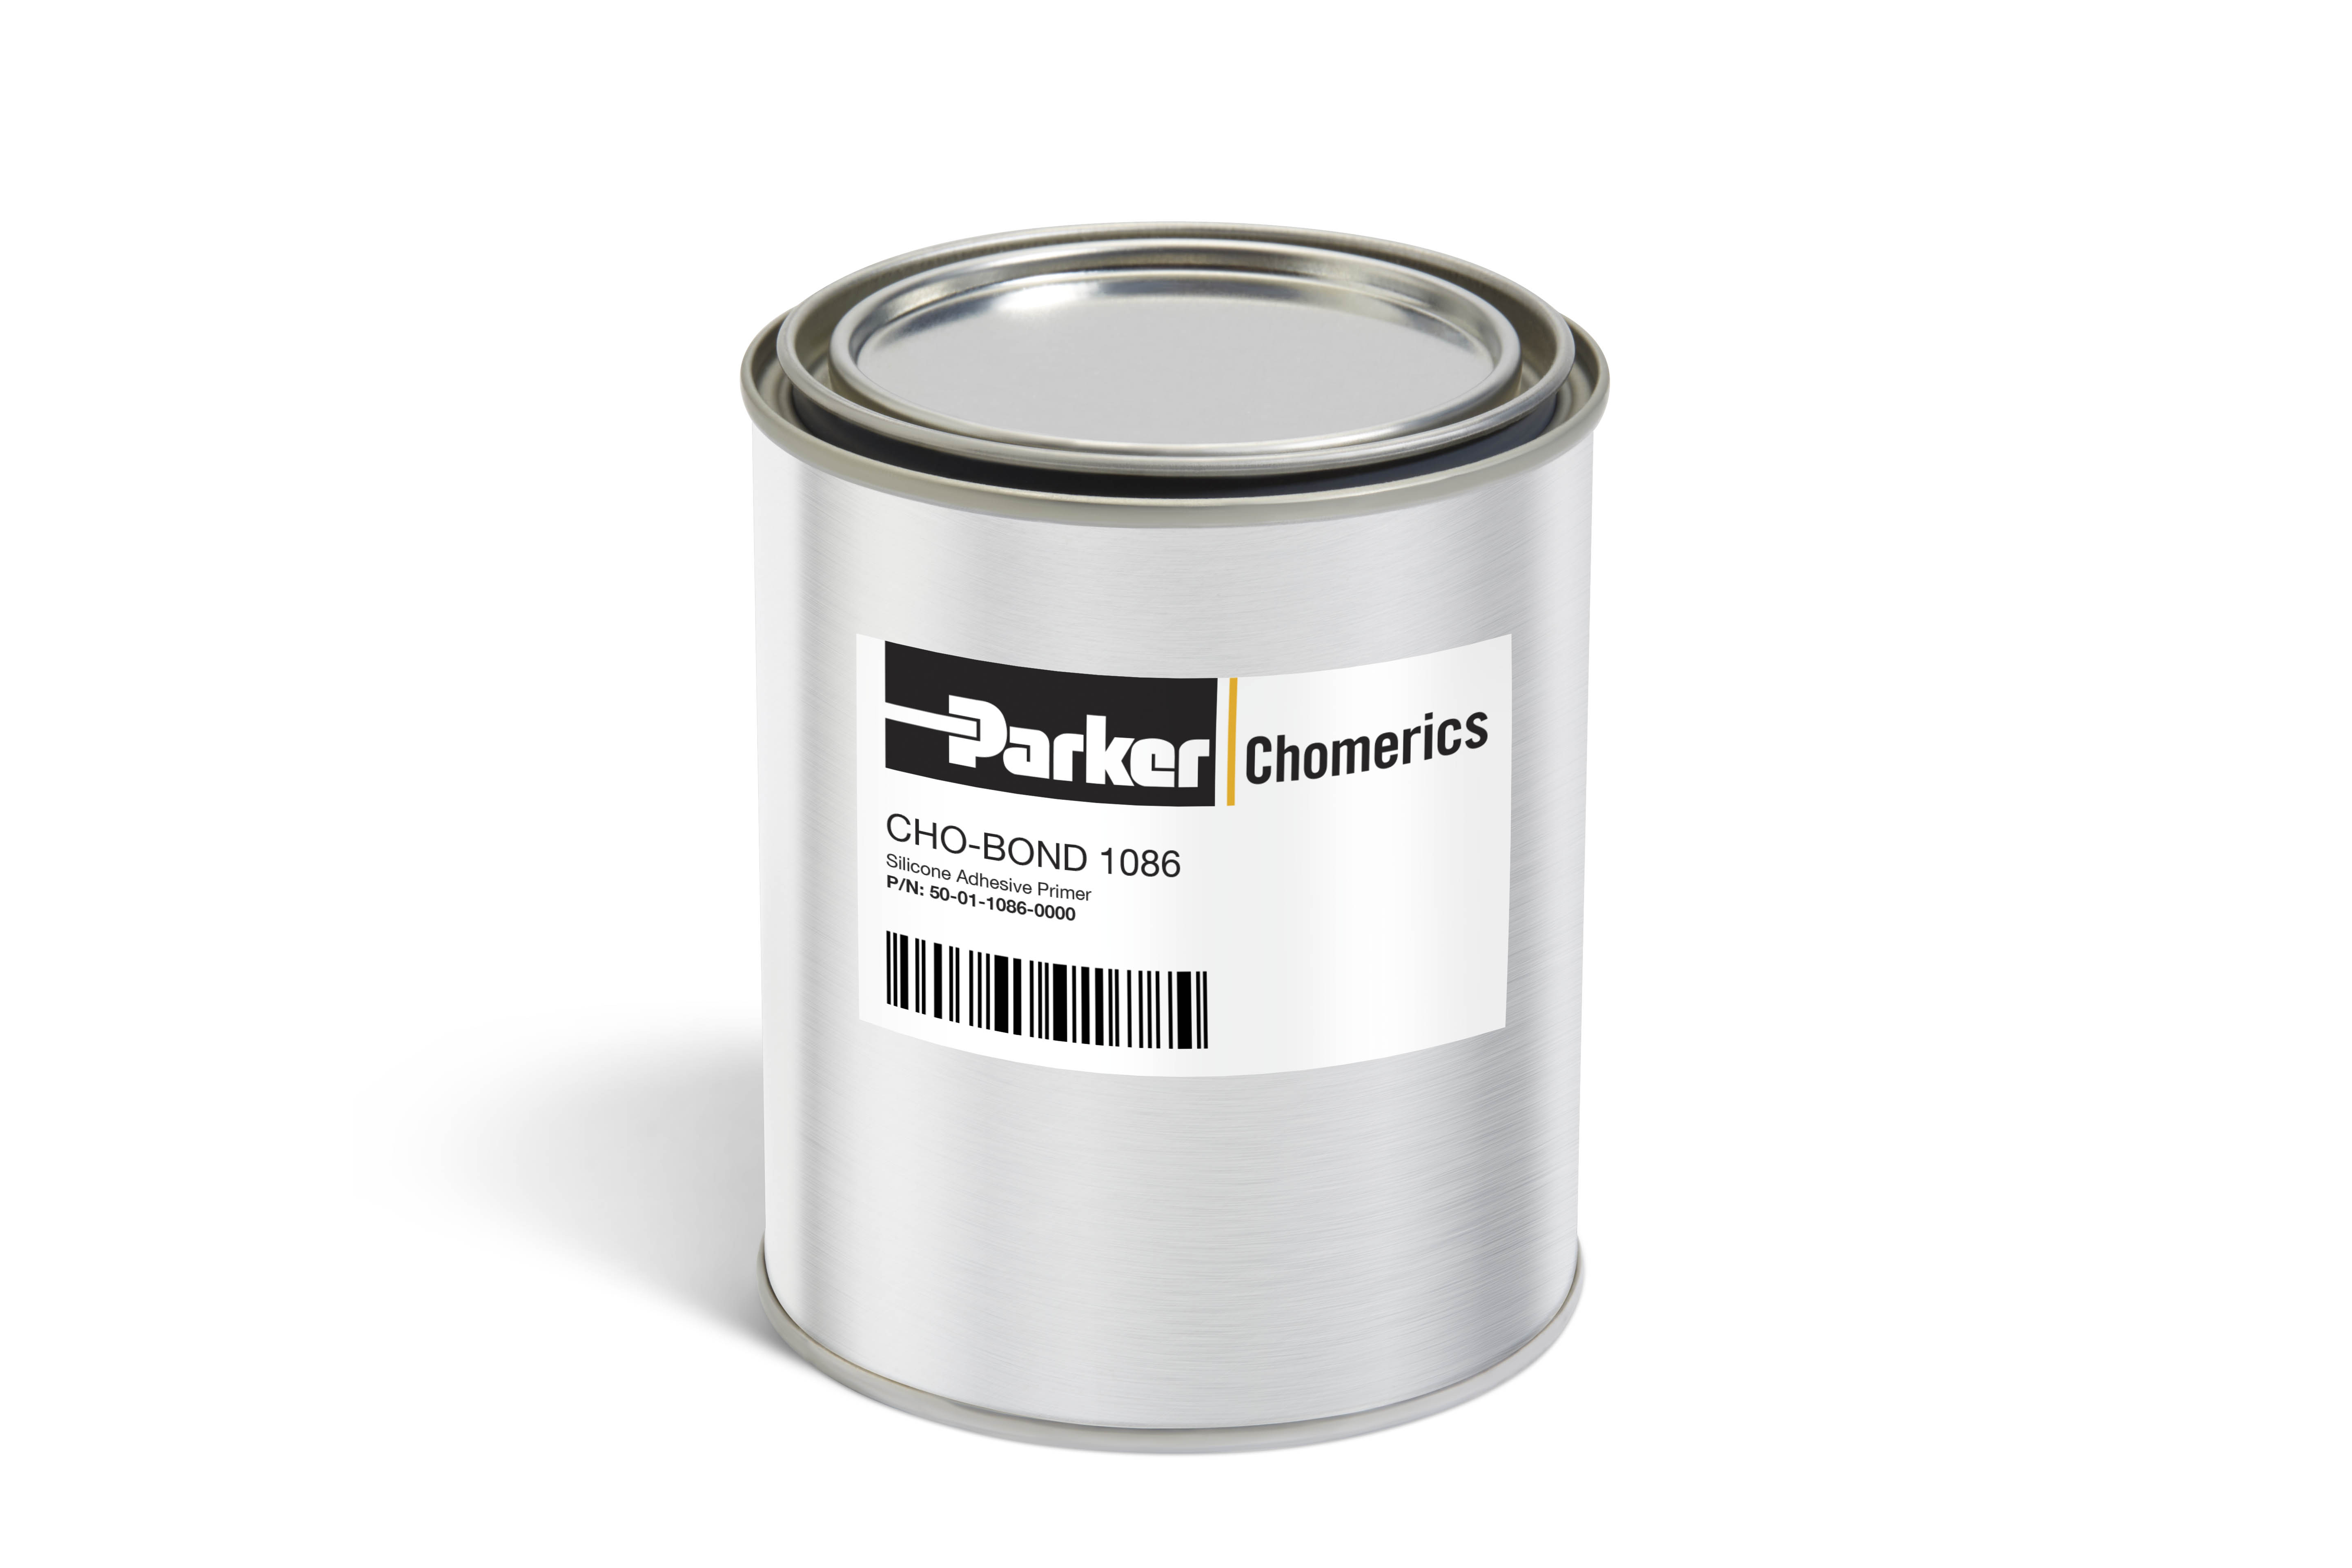 parker-chomerics-emi-shielding-solutions-50-01-1086-0000